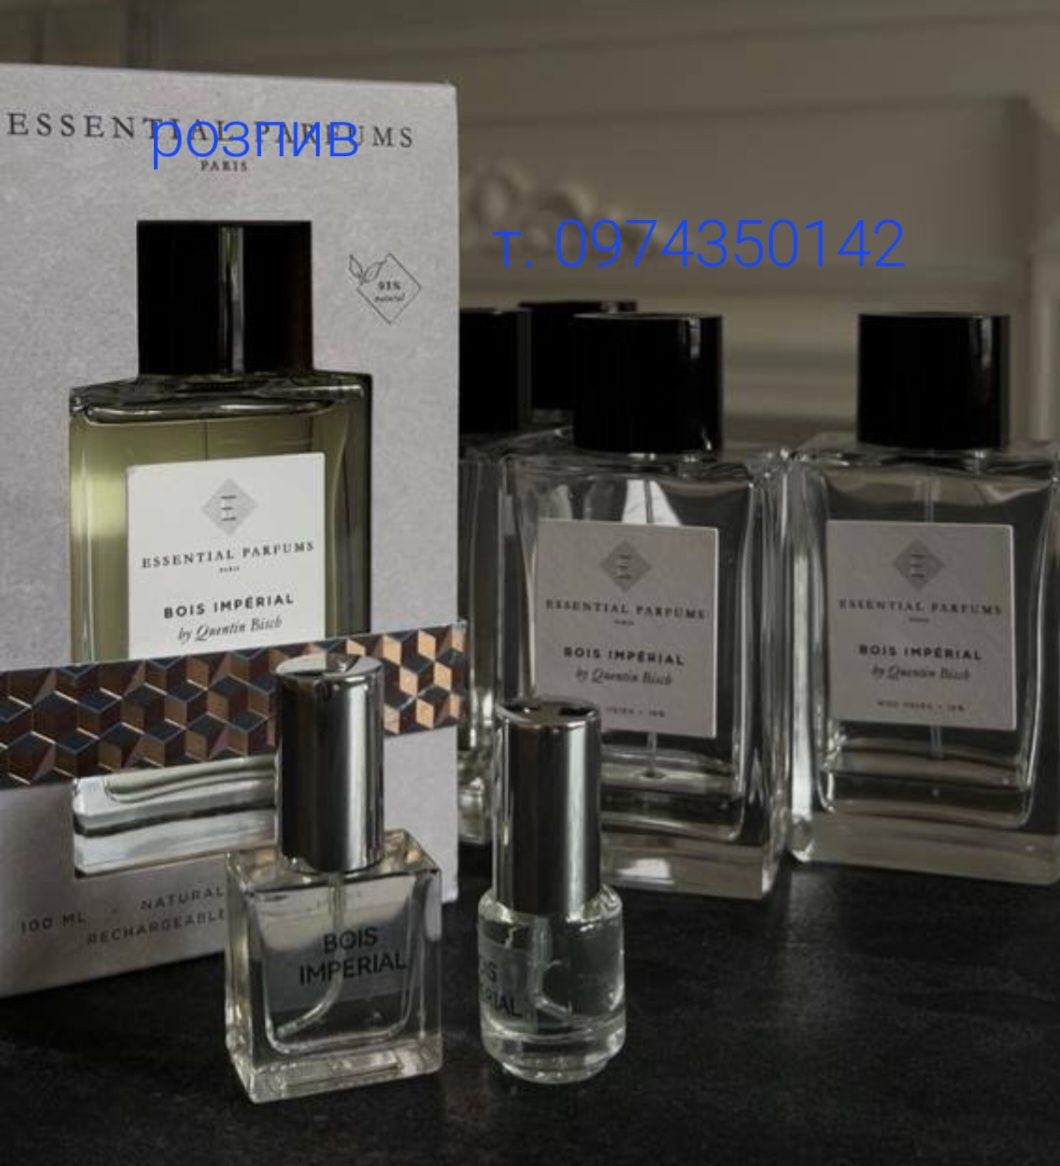 Essential Parfums Bois Imperial  оригінал
Парфумована вода